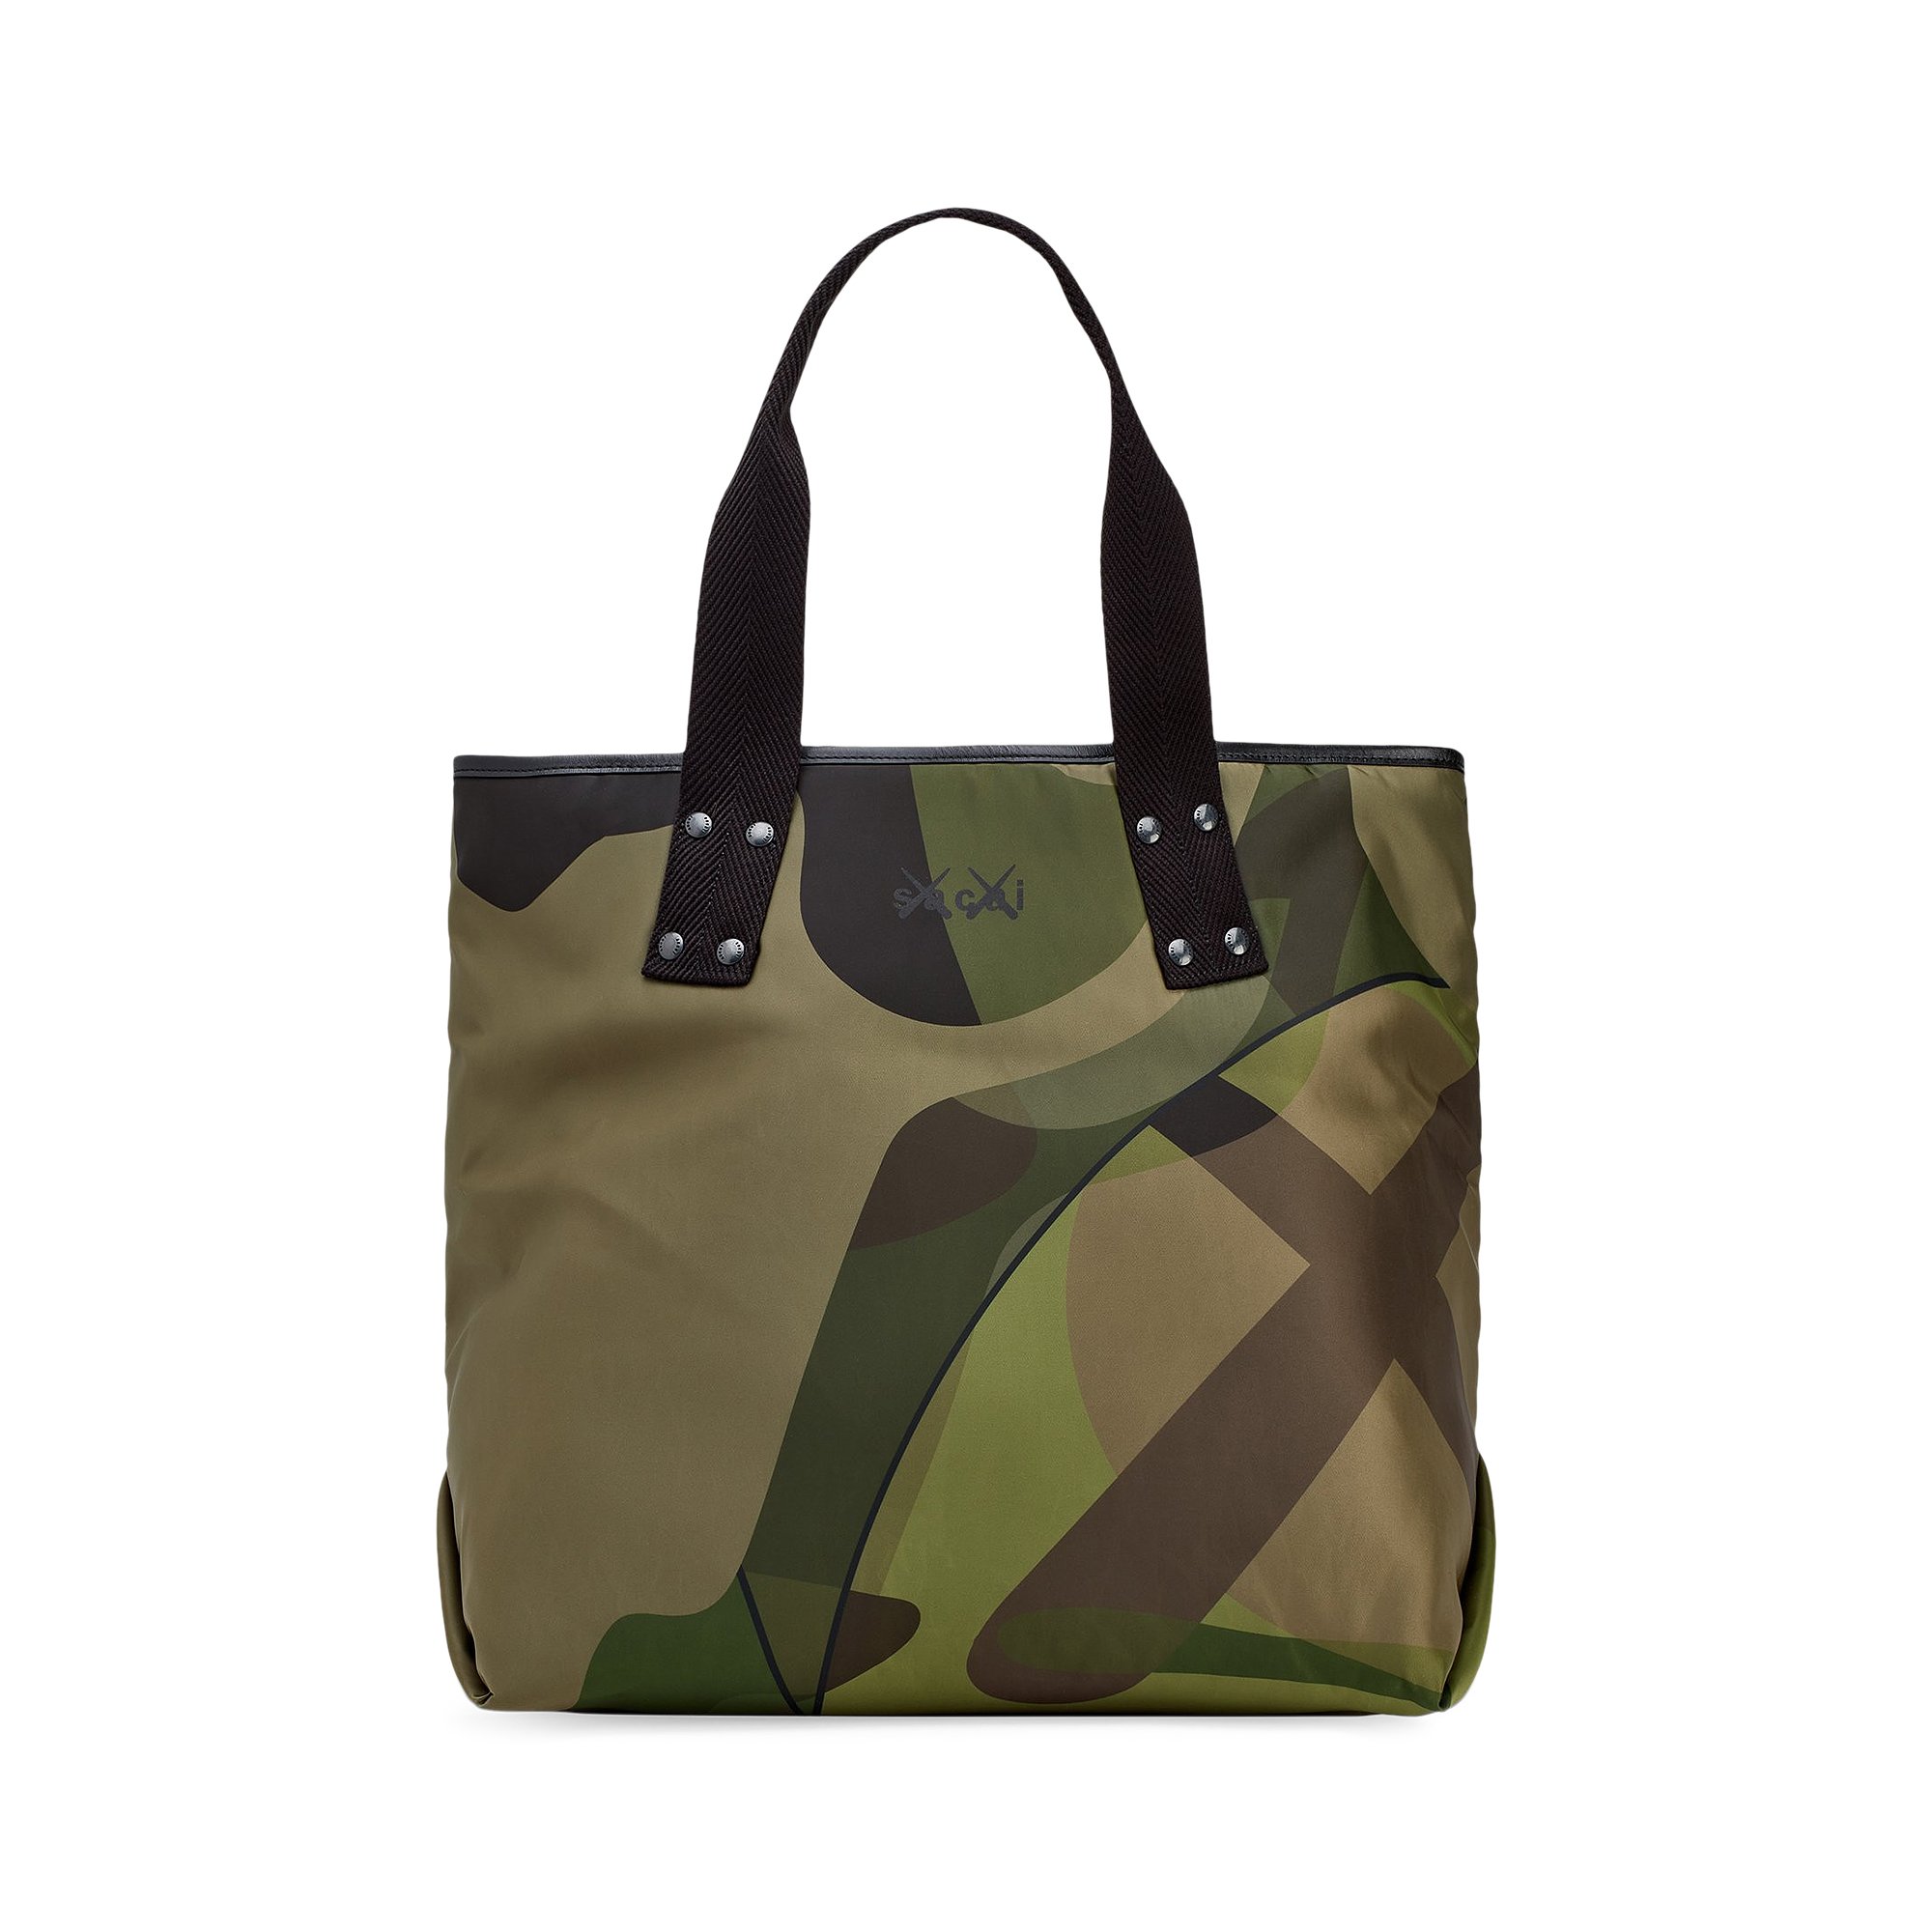 Sacai x KAWS Large Tote Bag 'Camouflage' | GOAT